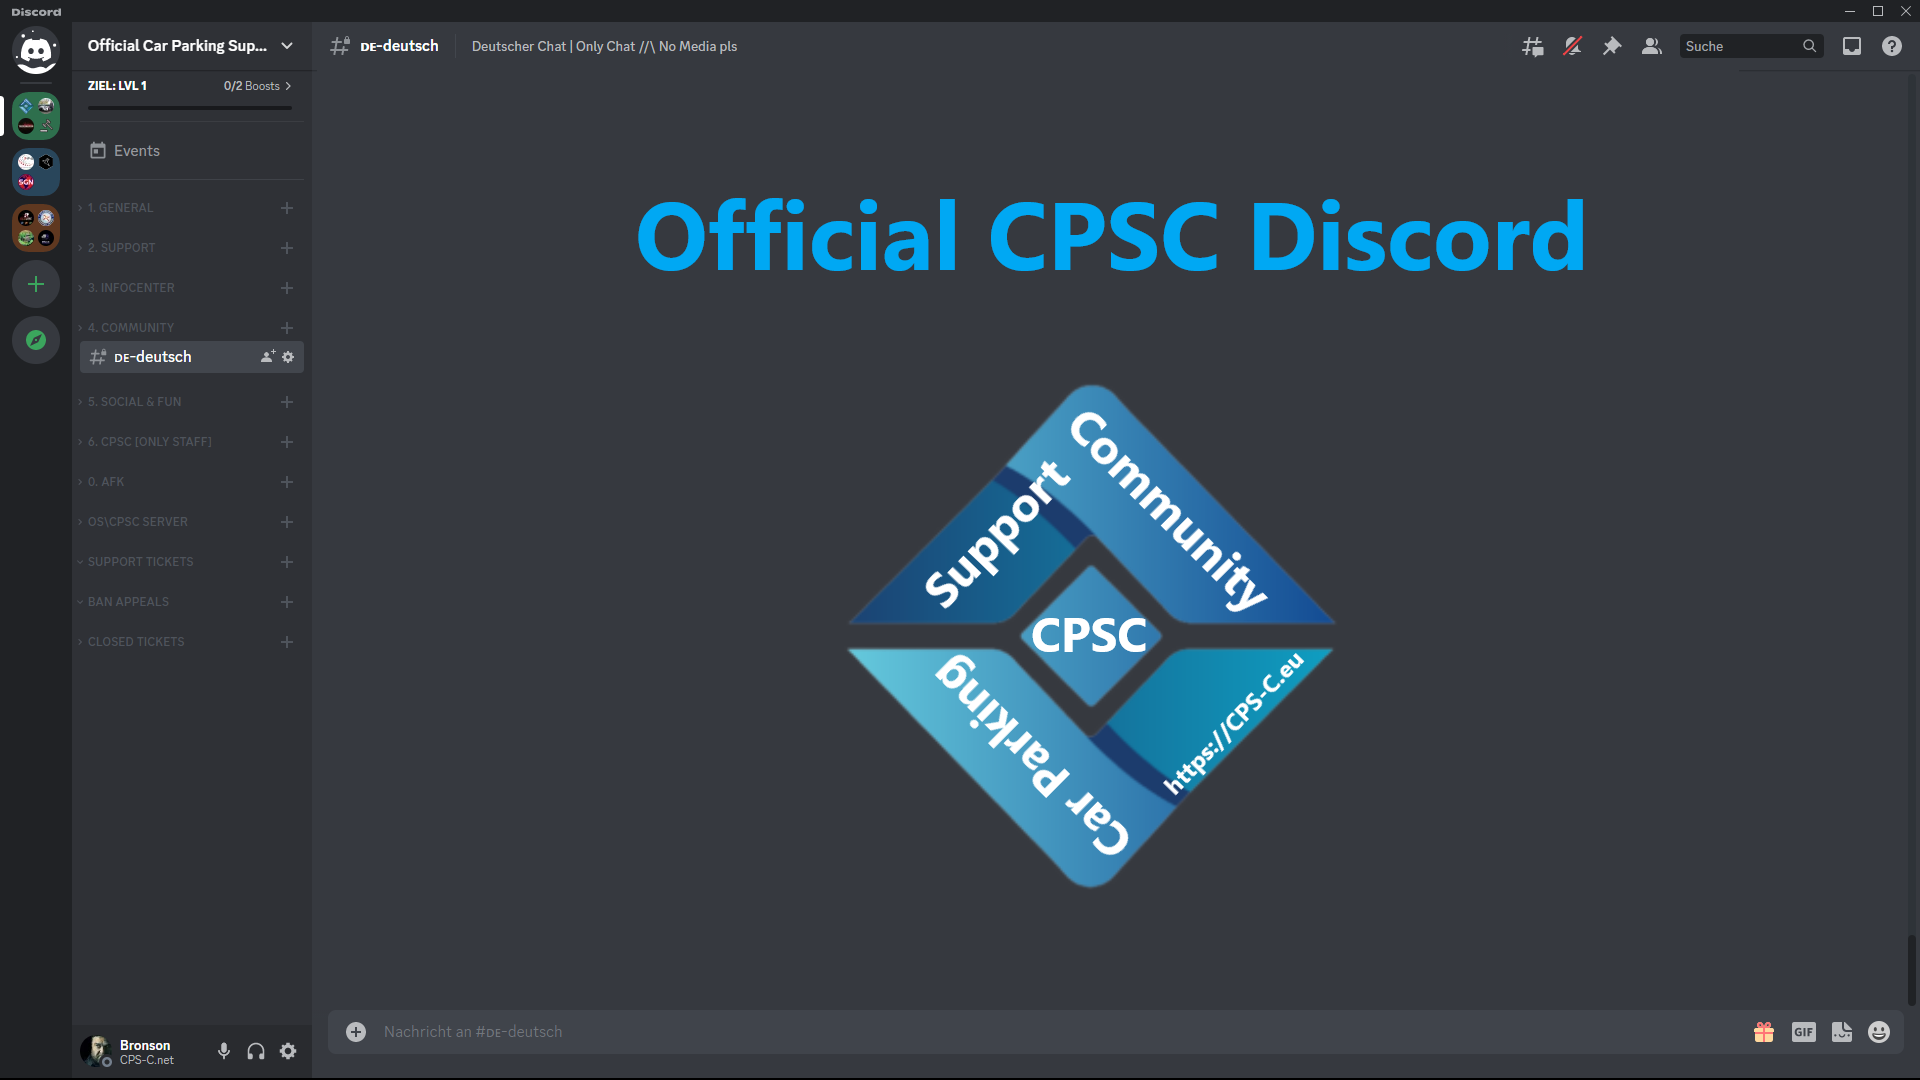 CPSC Discord